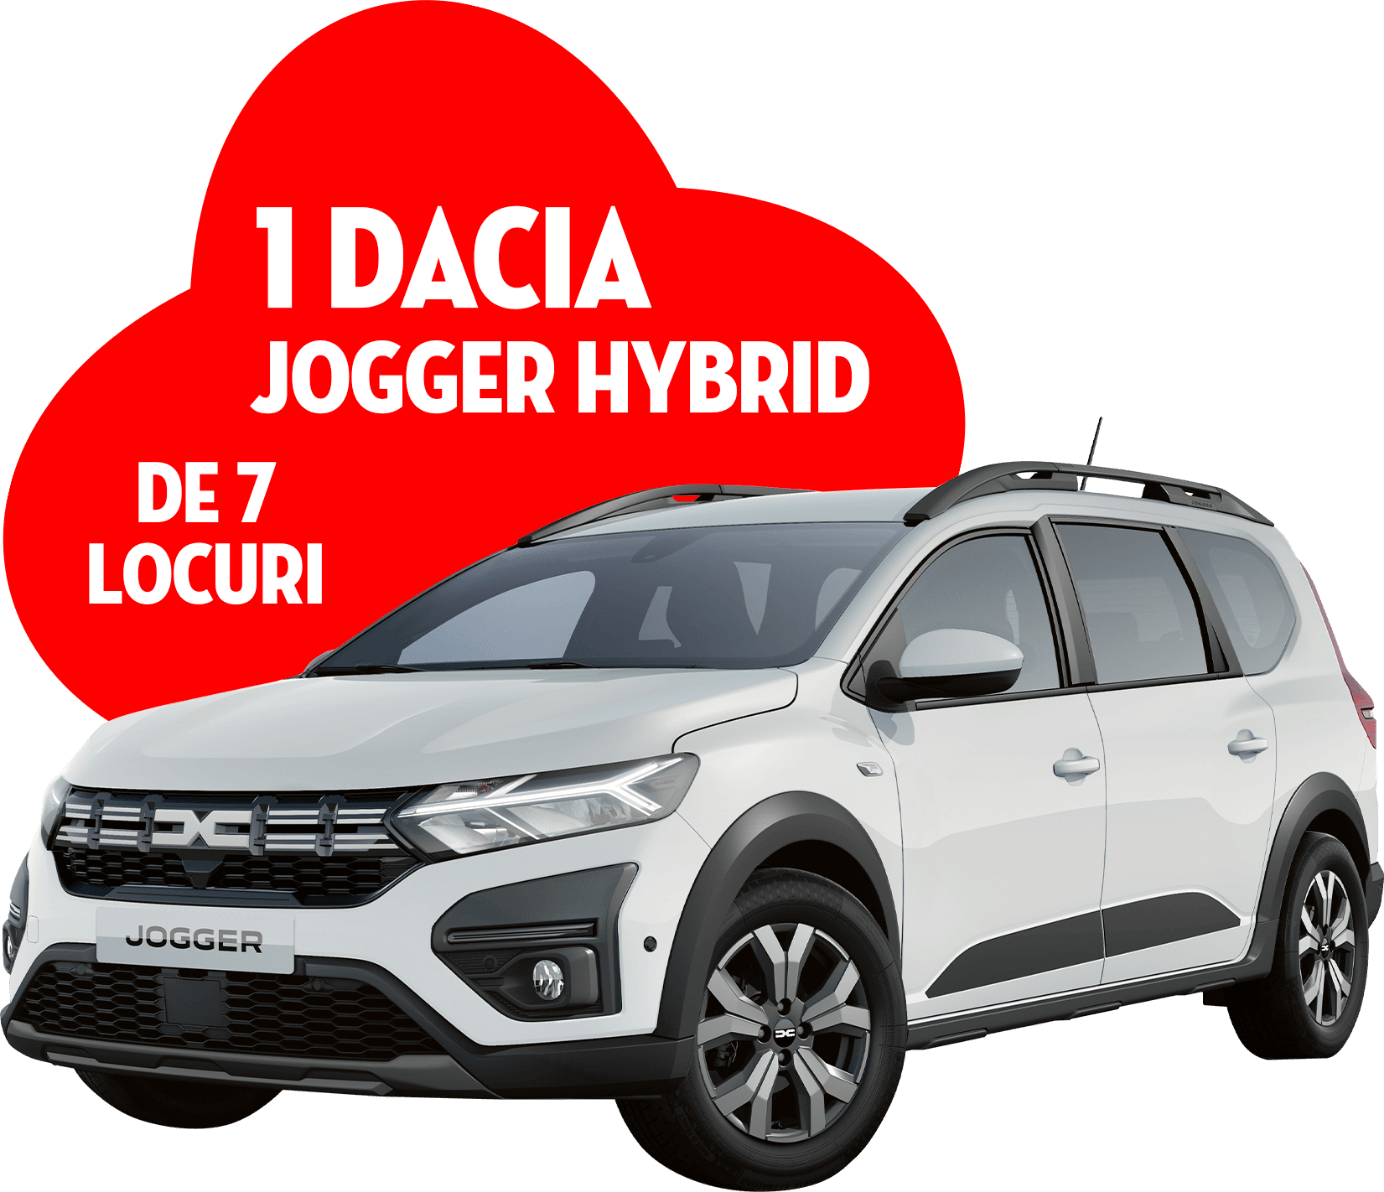 1 Dacia Jogger Hybrid de 7 locuri - Pufina